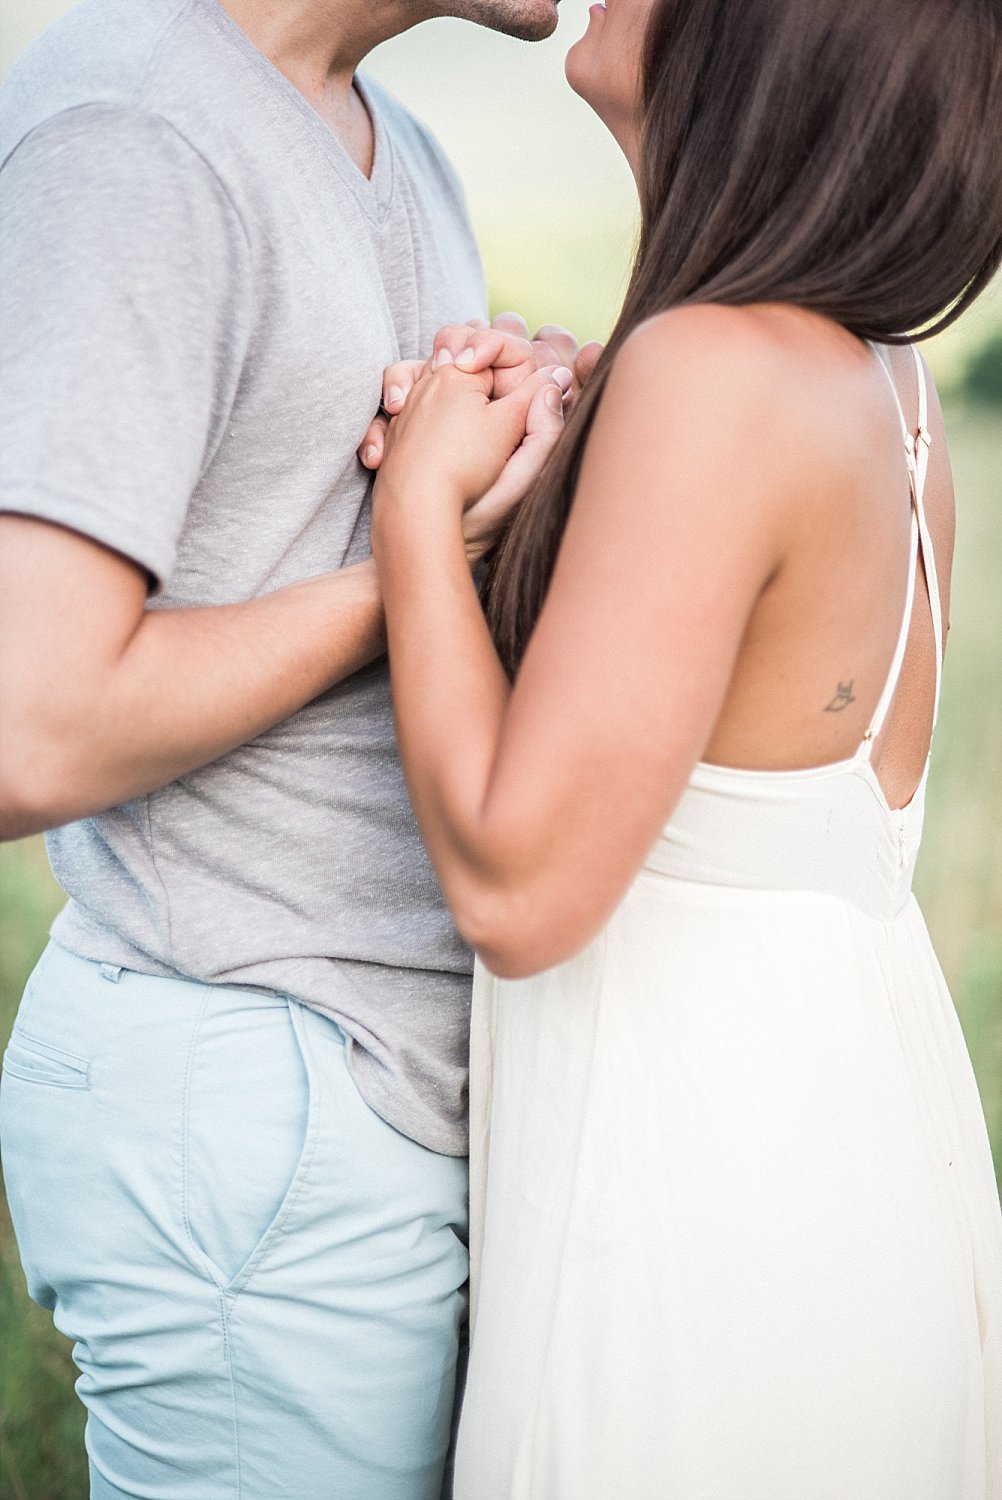 Cades Cove Smoky Mountain Engagement | Alisha & Evan | Gatlinburg Wedding Photographer